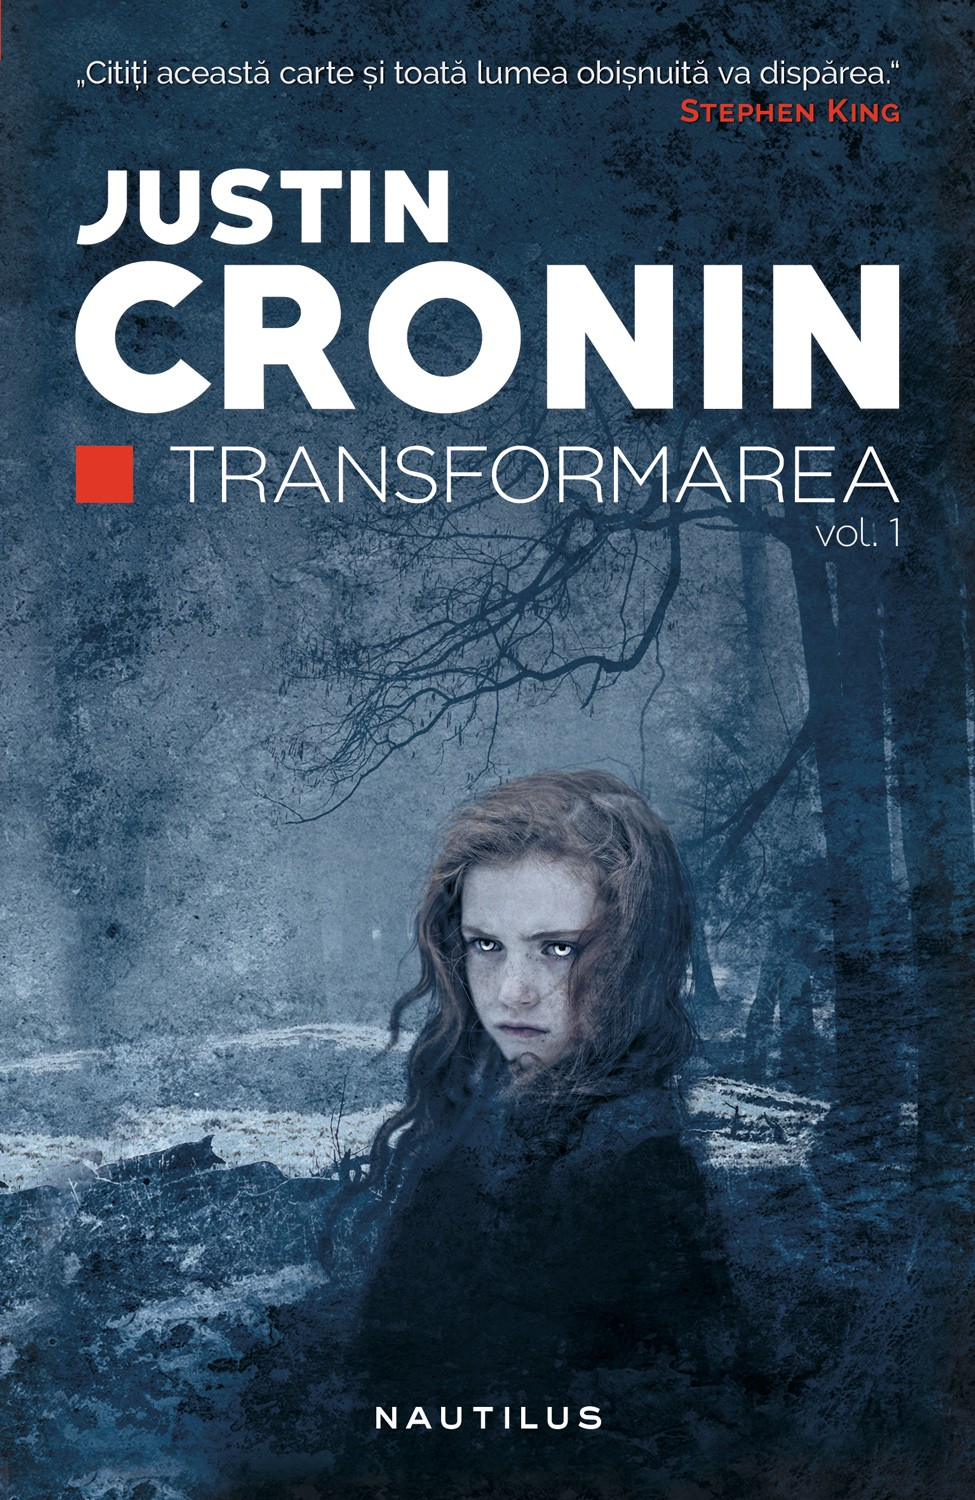 eBook Transformarea - Justin Cronin